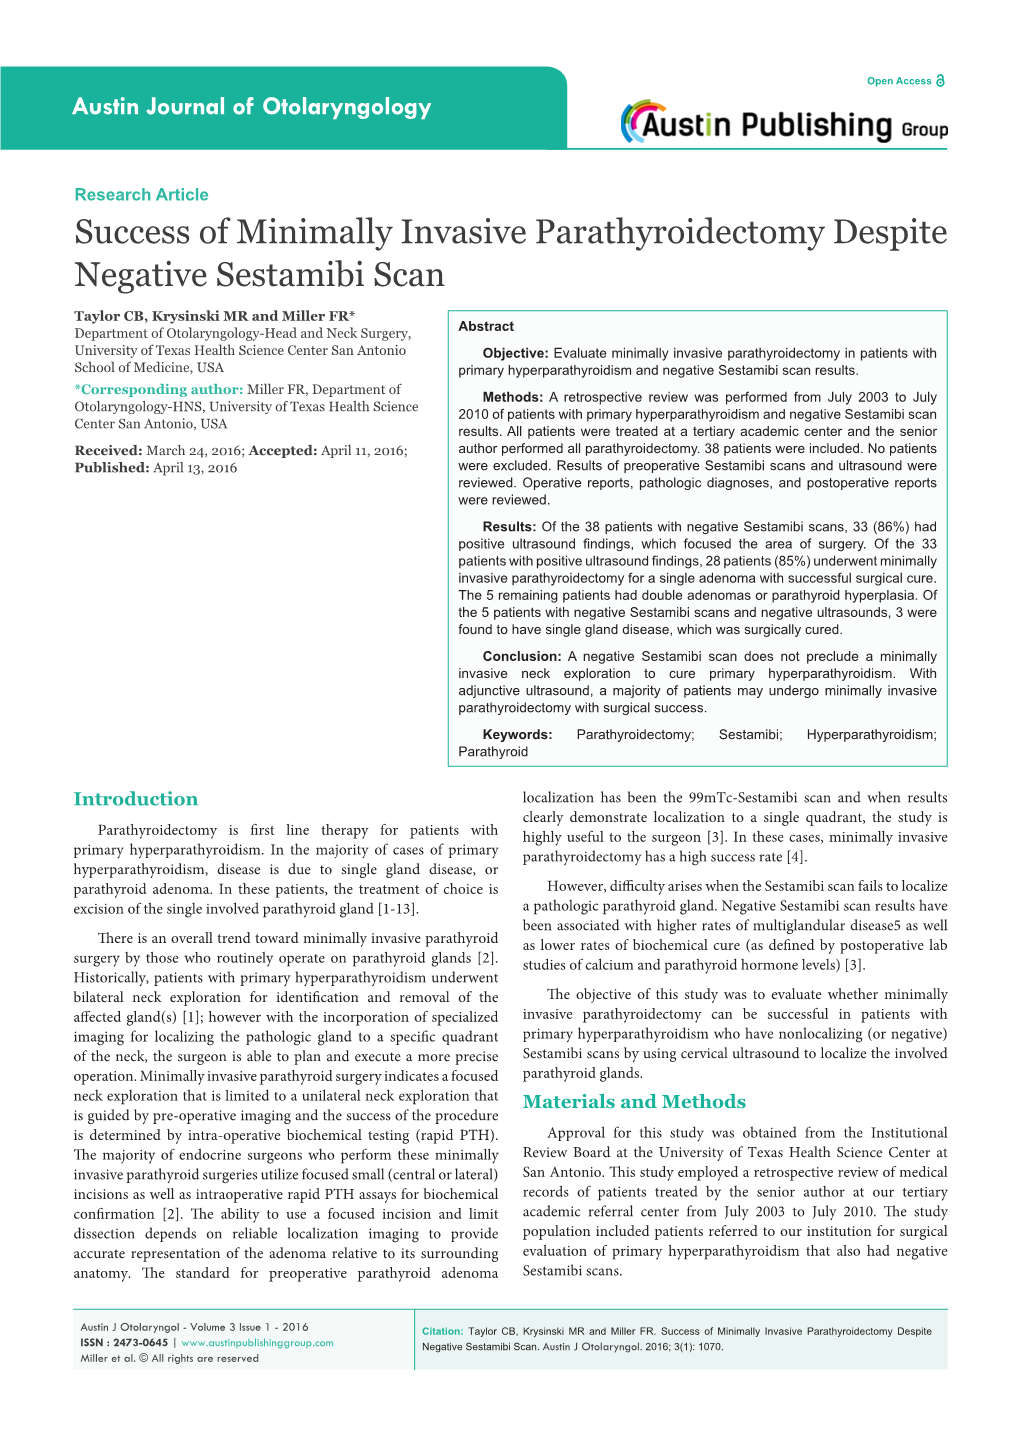 Success of Minimally Invasive Parathyroidectomy Despite Negative Sestamibi Scan